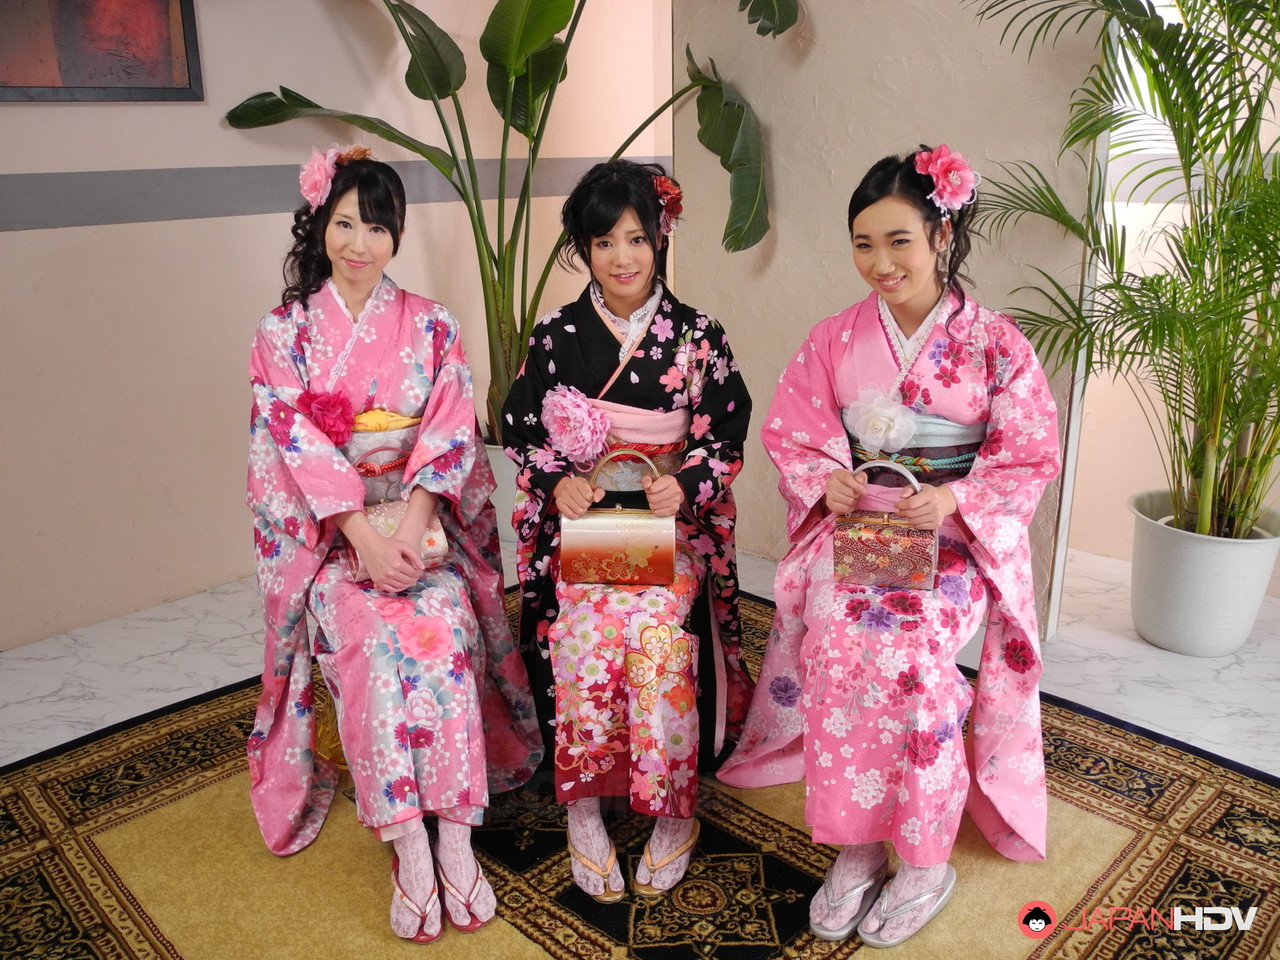 Sexy Asian girl Hina & her friends suck a dick wearing traditional Asian robes ポルノ写真 #424210118 | Japan HDV Pics, Hina, Sanae Momoi, Uta Kohaku, CFNM, モバイルポルノ